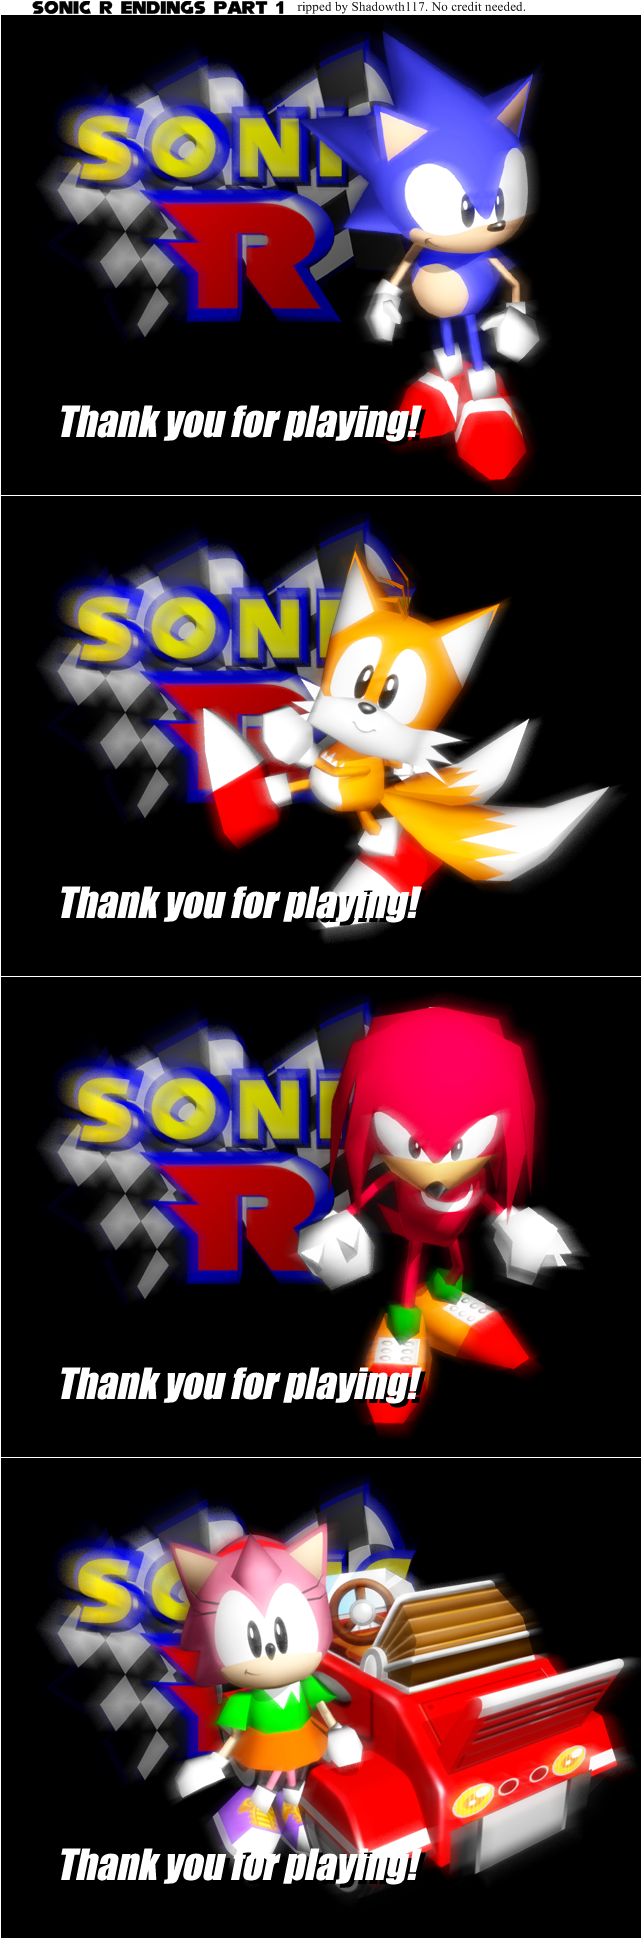 Sonic R - Endings Part 1